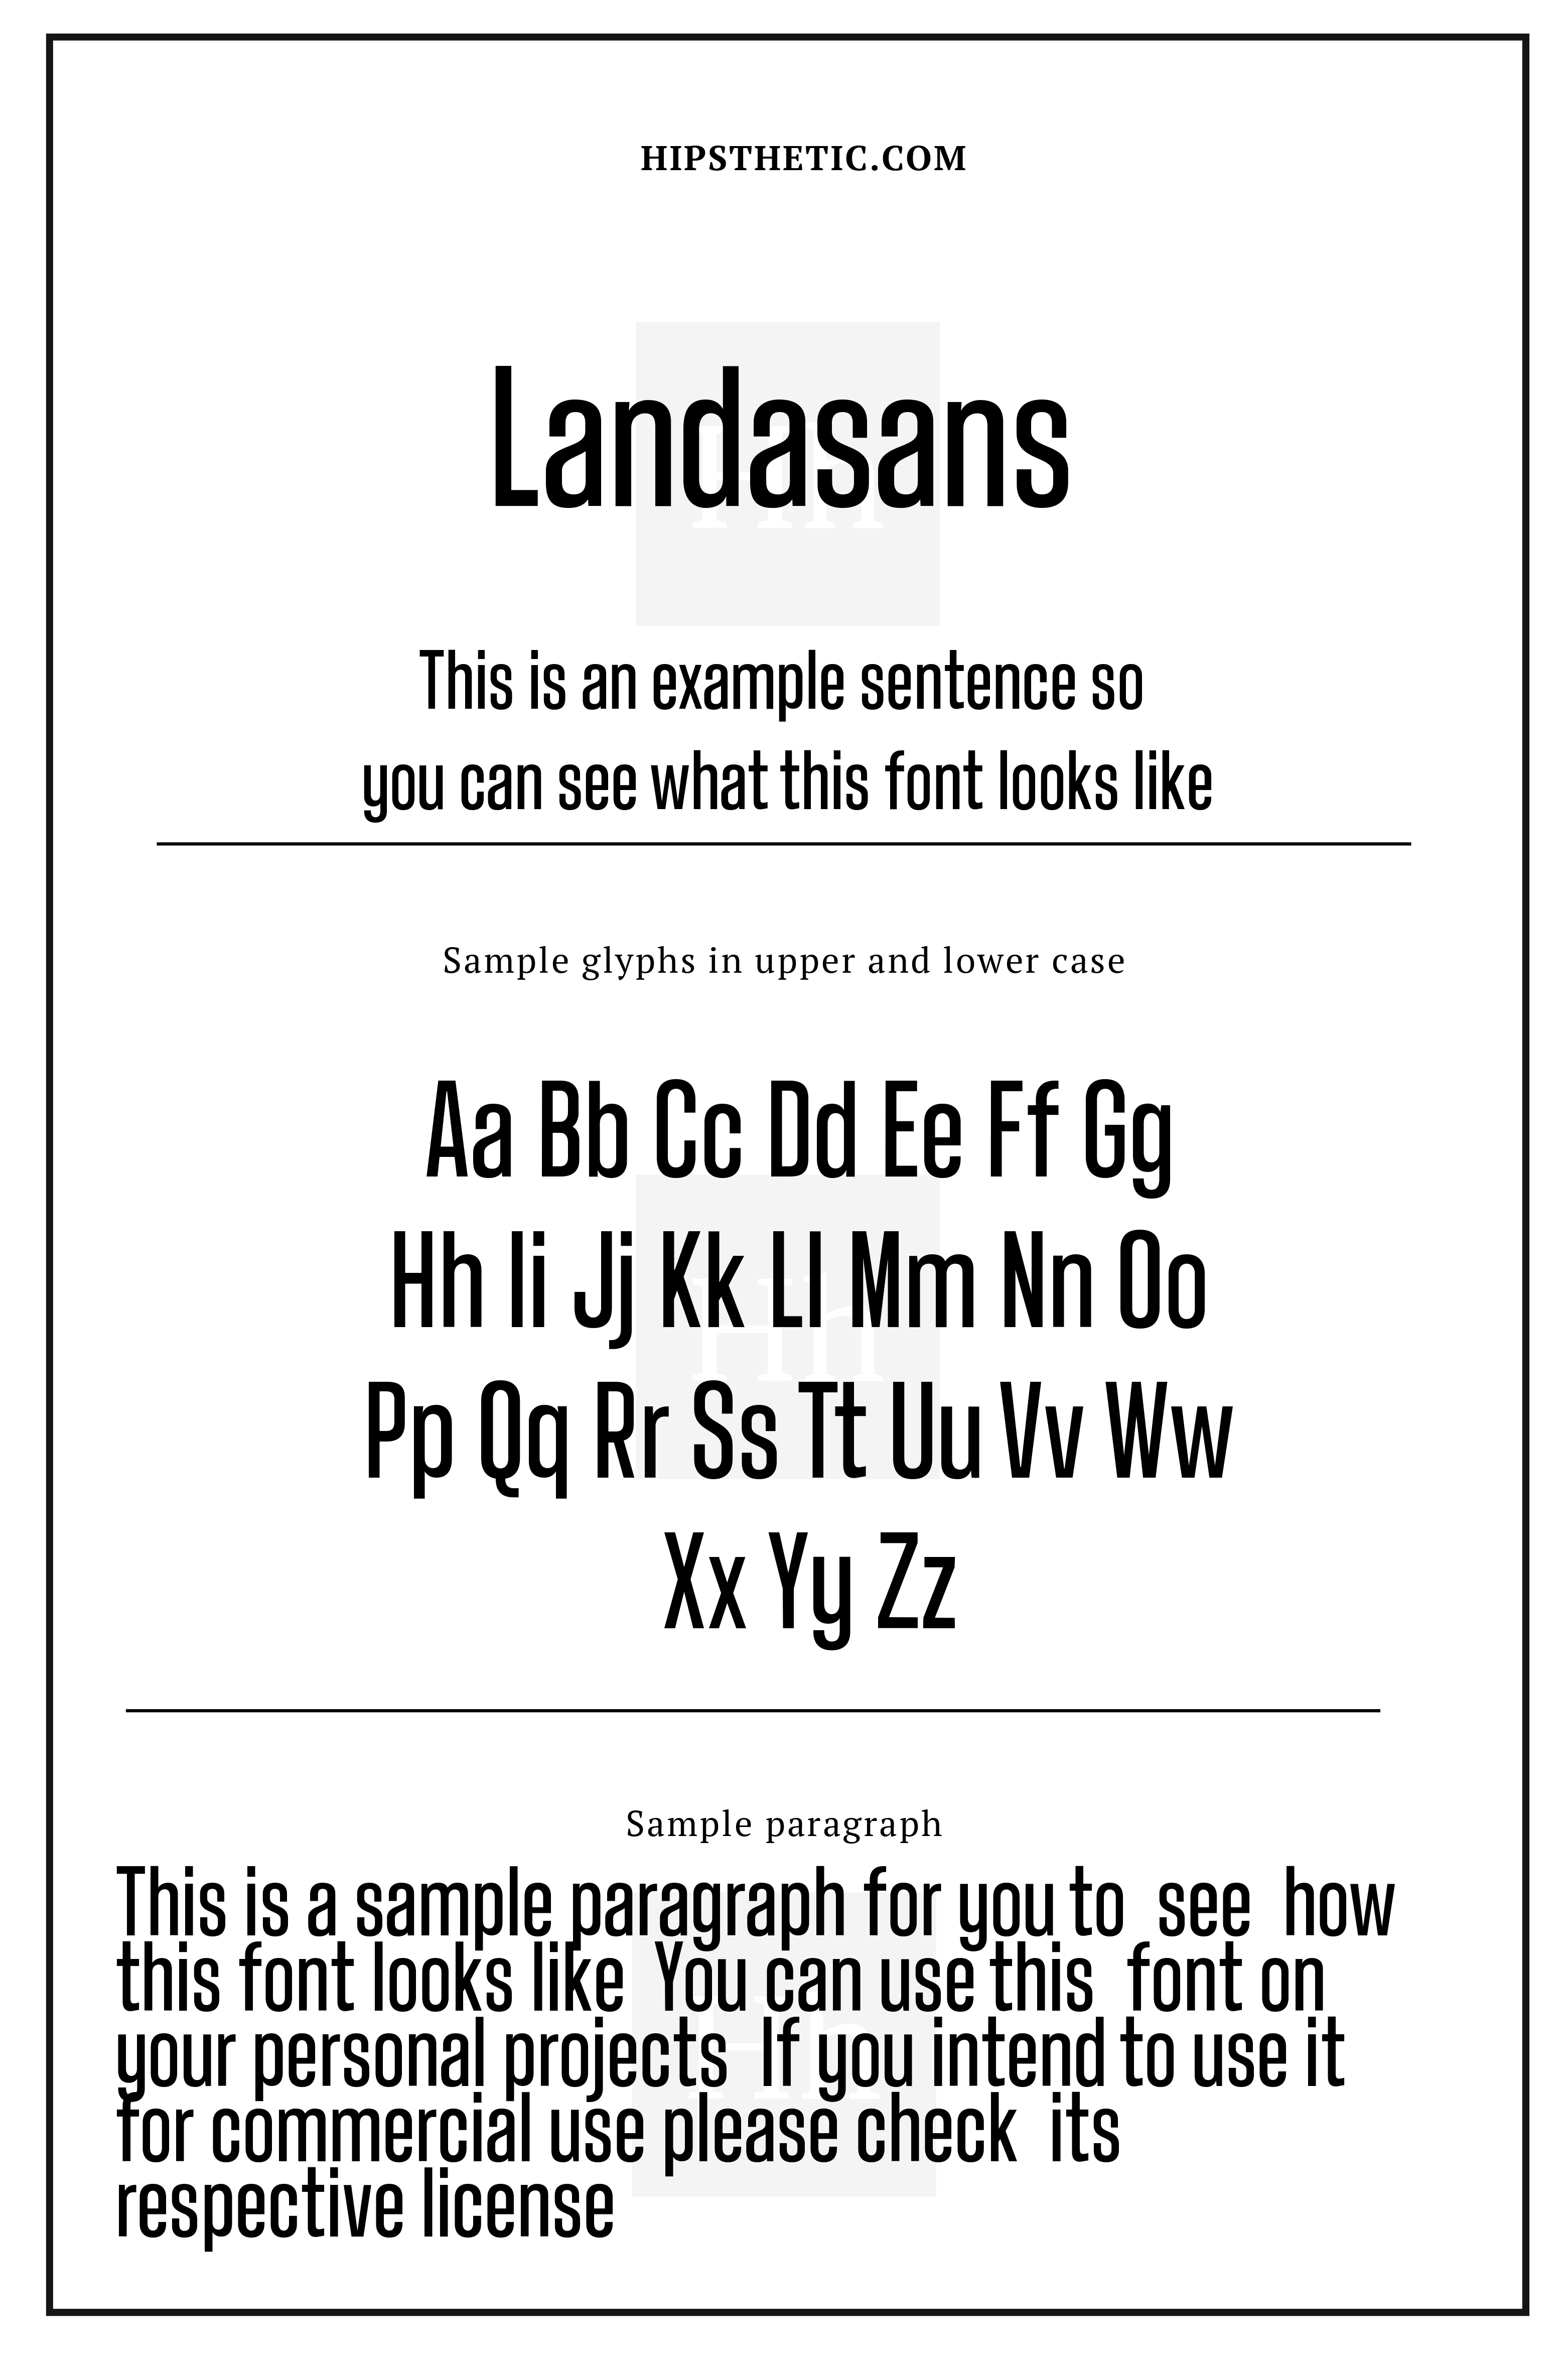 Landasans Bold Sans Serif Fonts Hipsthetic